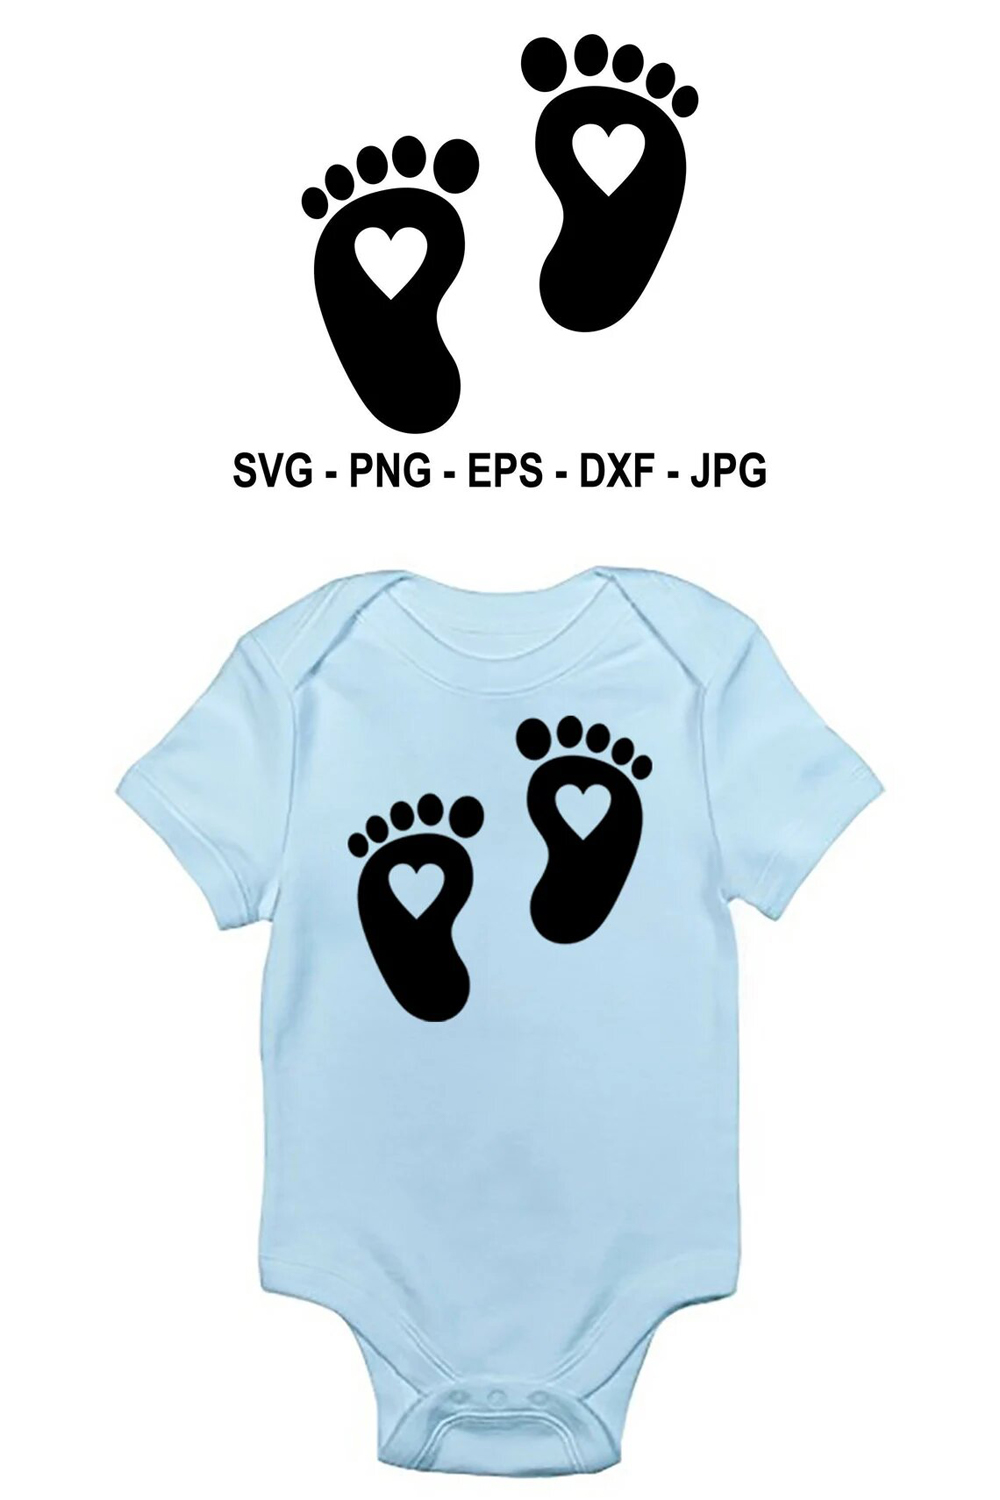 Baby footprint svg of pinterest.